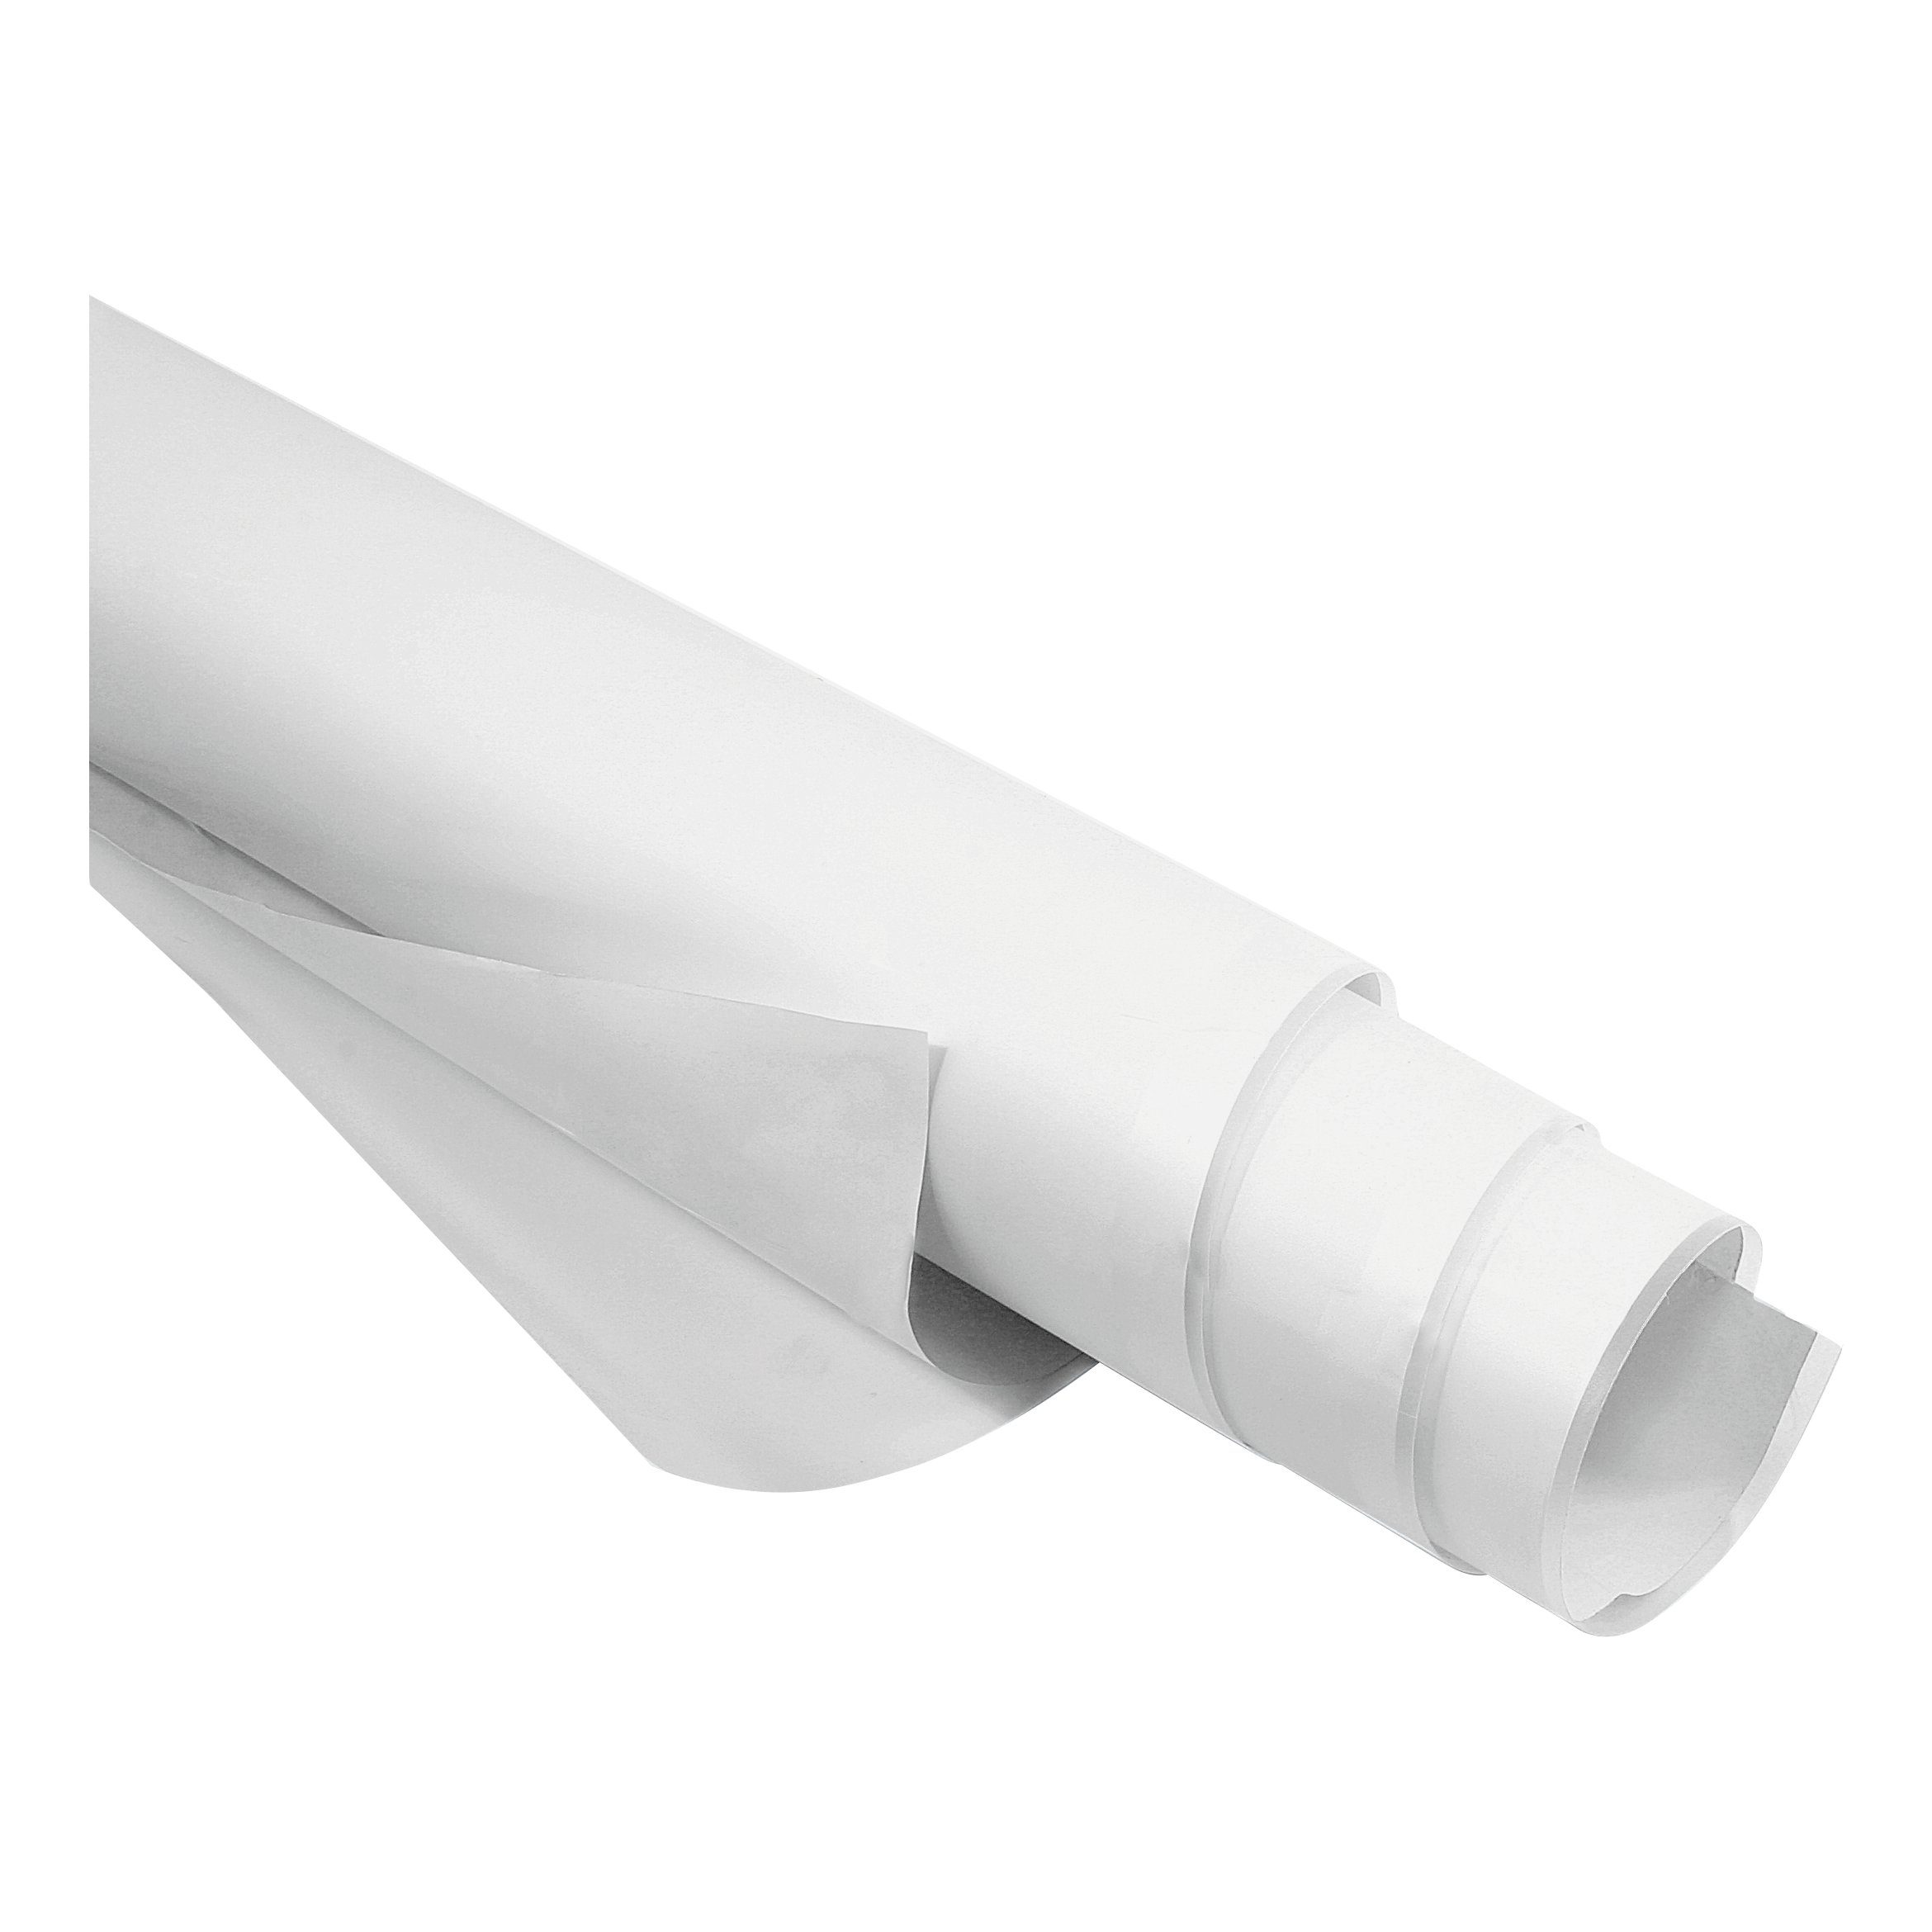 VBS Lampenschirm Lampenschirm-Folie milchig 0,4 mm, 60 cm breit (Meterware)